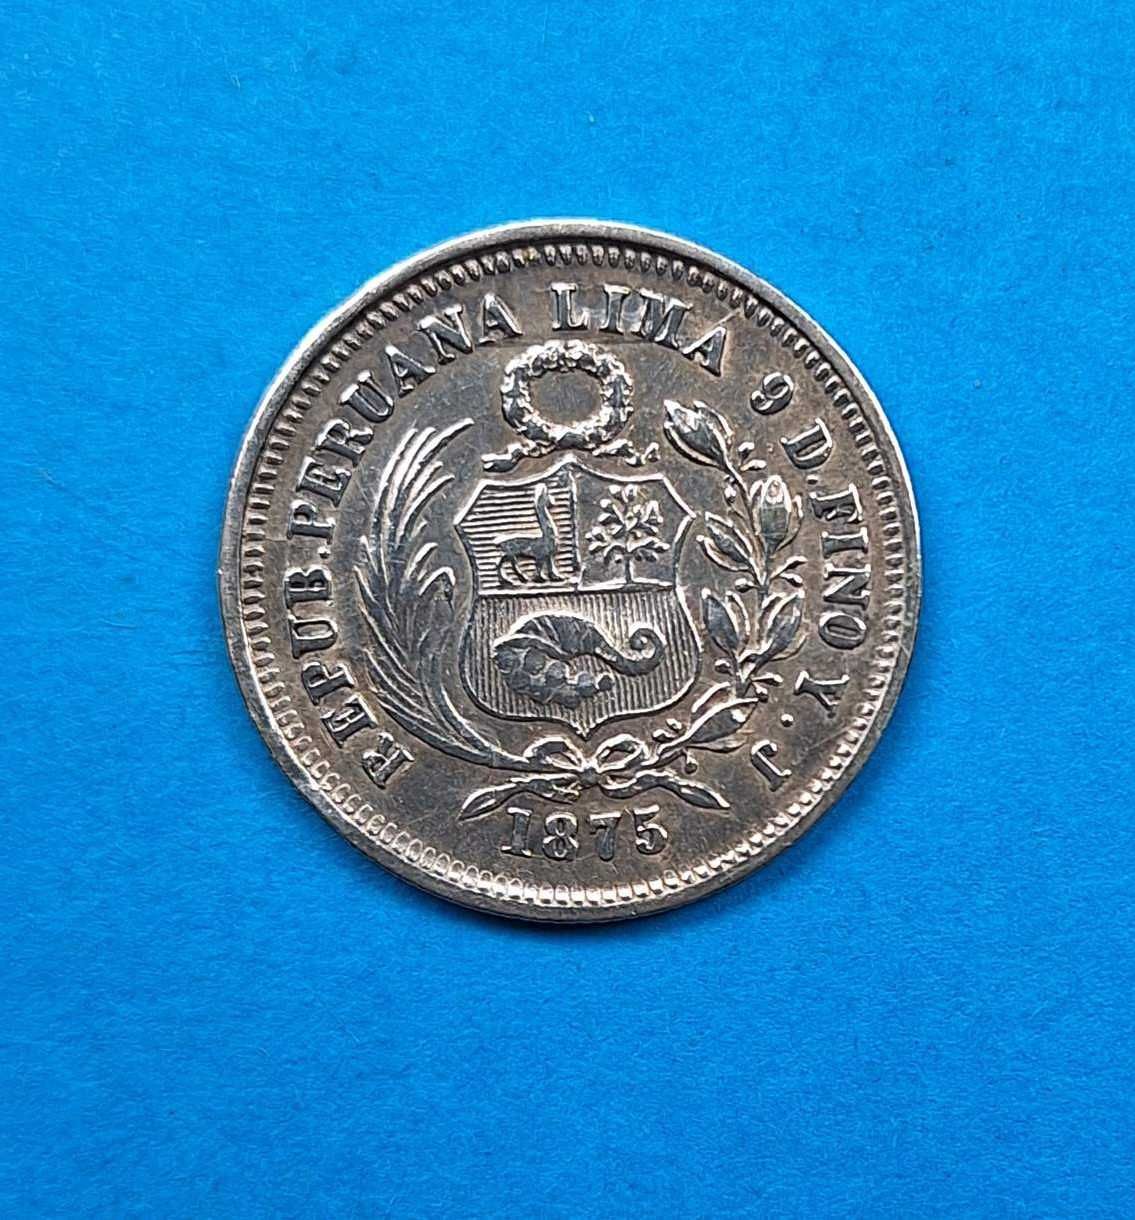 Peru 1/5 sola rok 1875, dobry stan, srebro 0,900